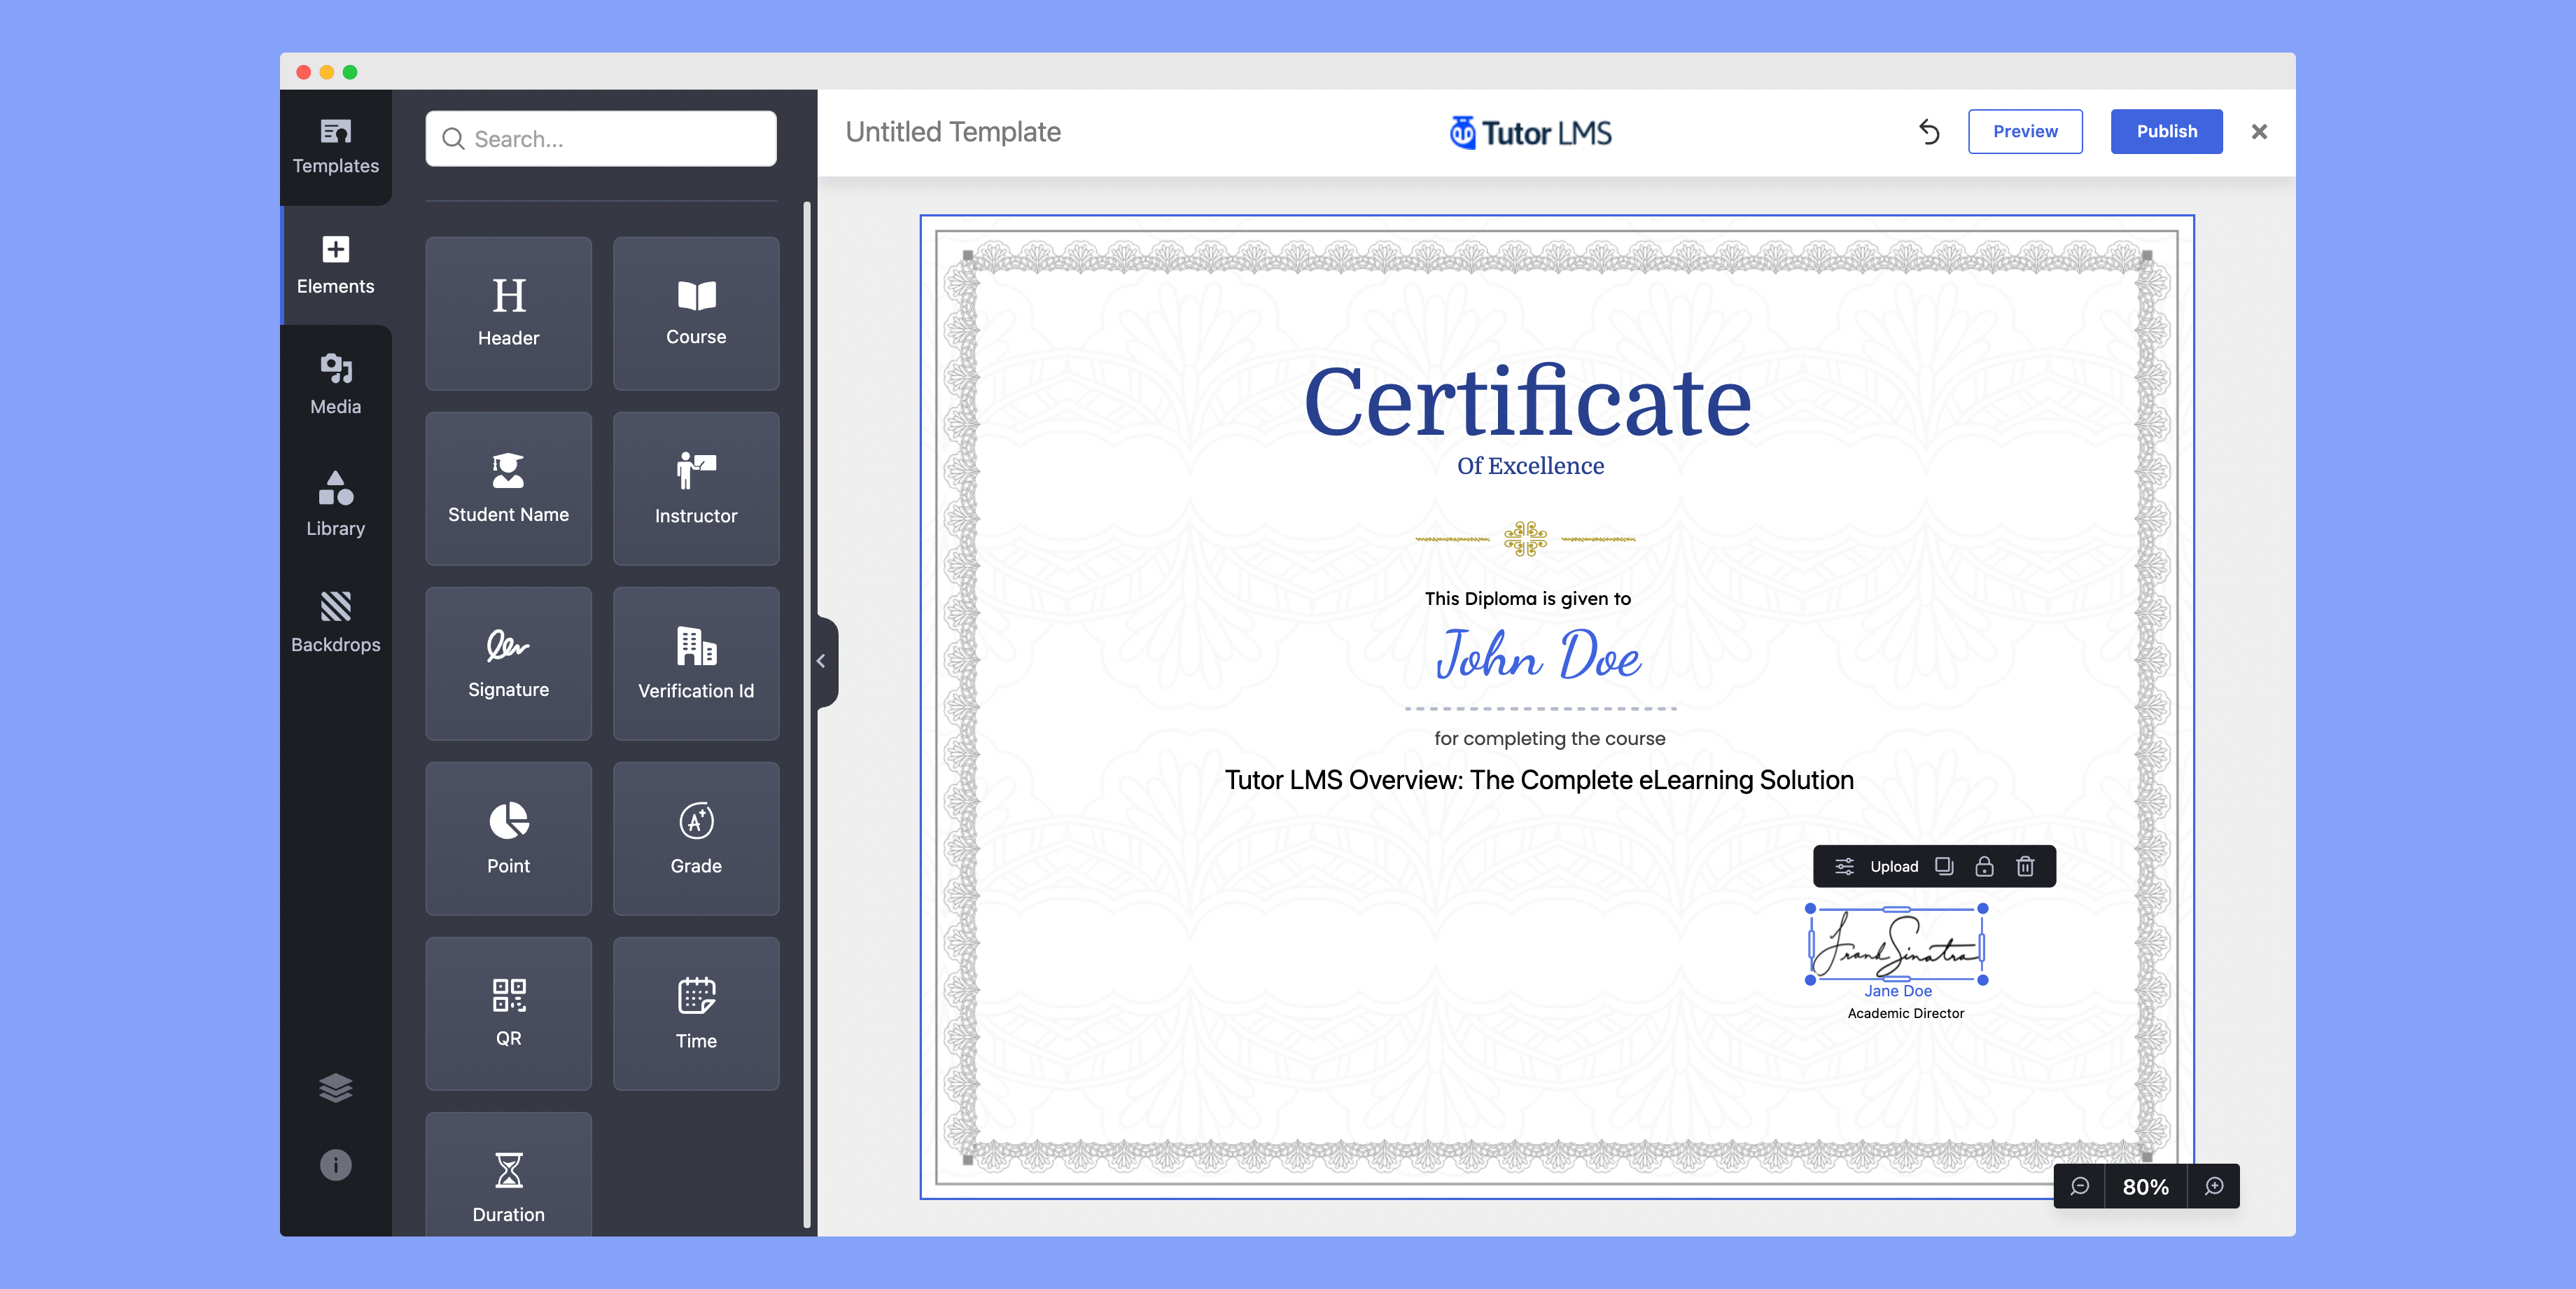 Designing Certificate from Scratch